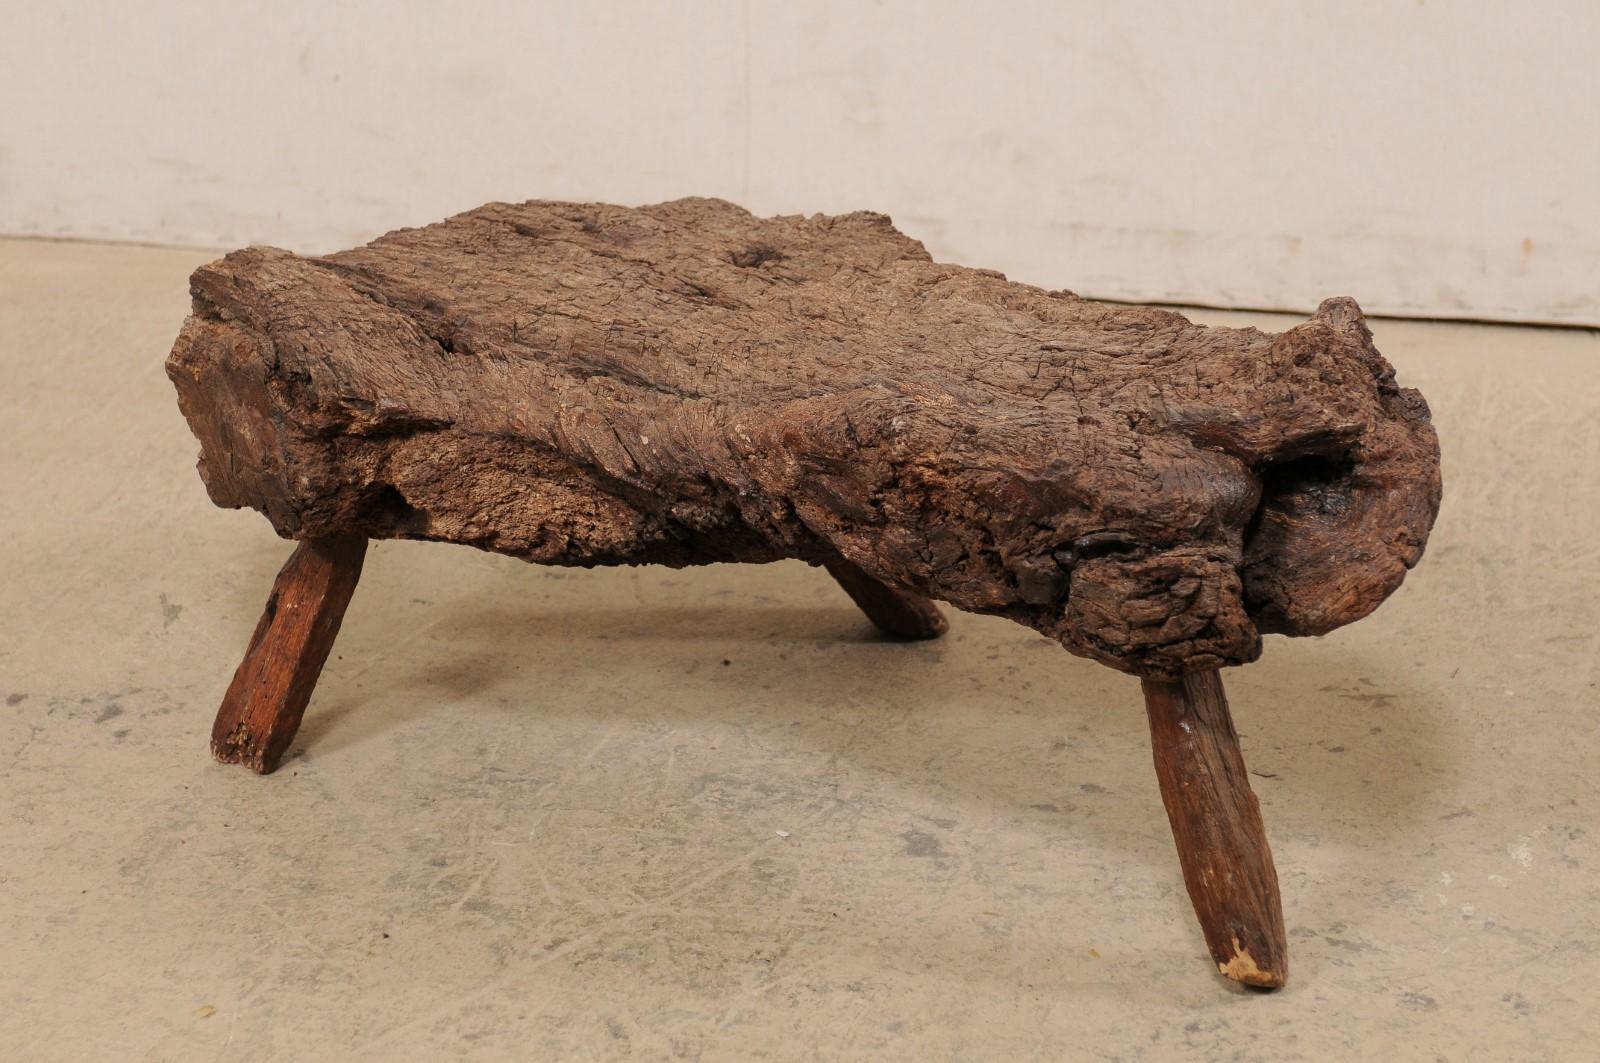 Spanish Petite-Sized Knobby Live-Edge Burl Wood Table or Stool on Limb Legs 8